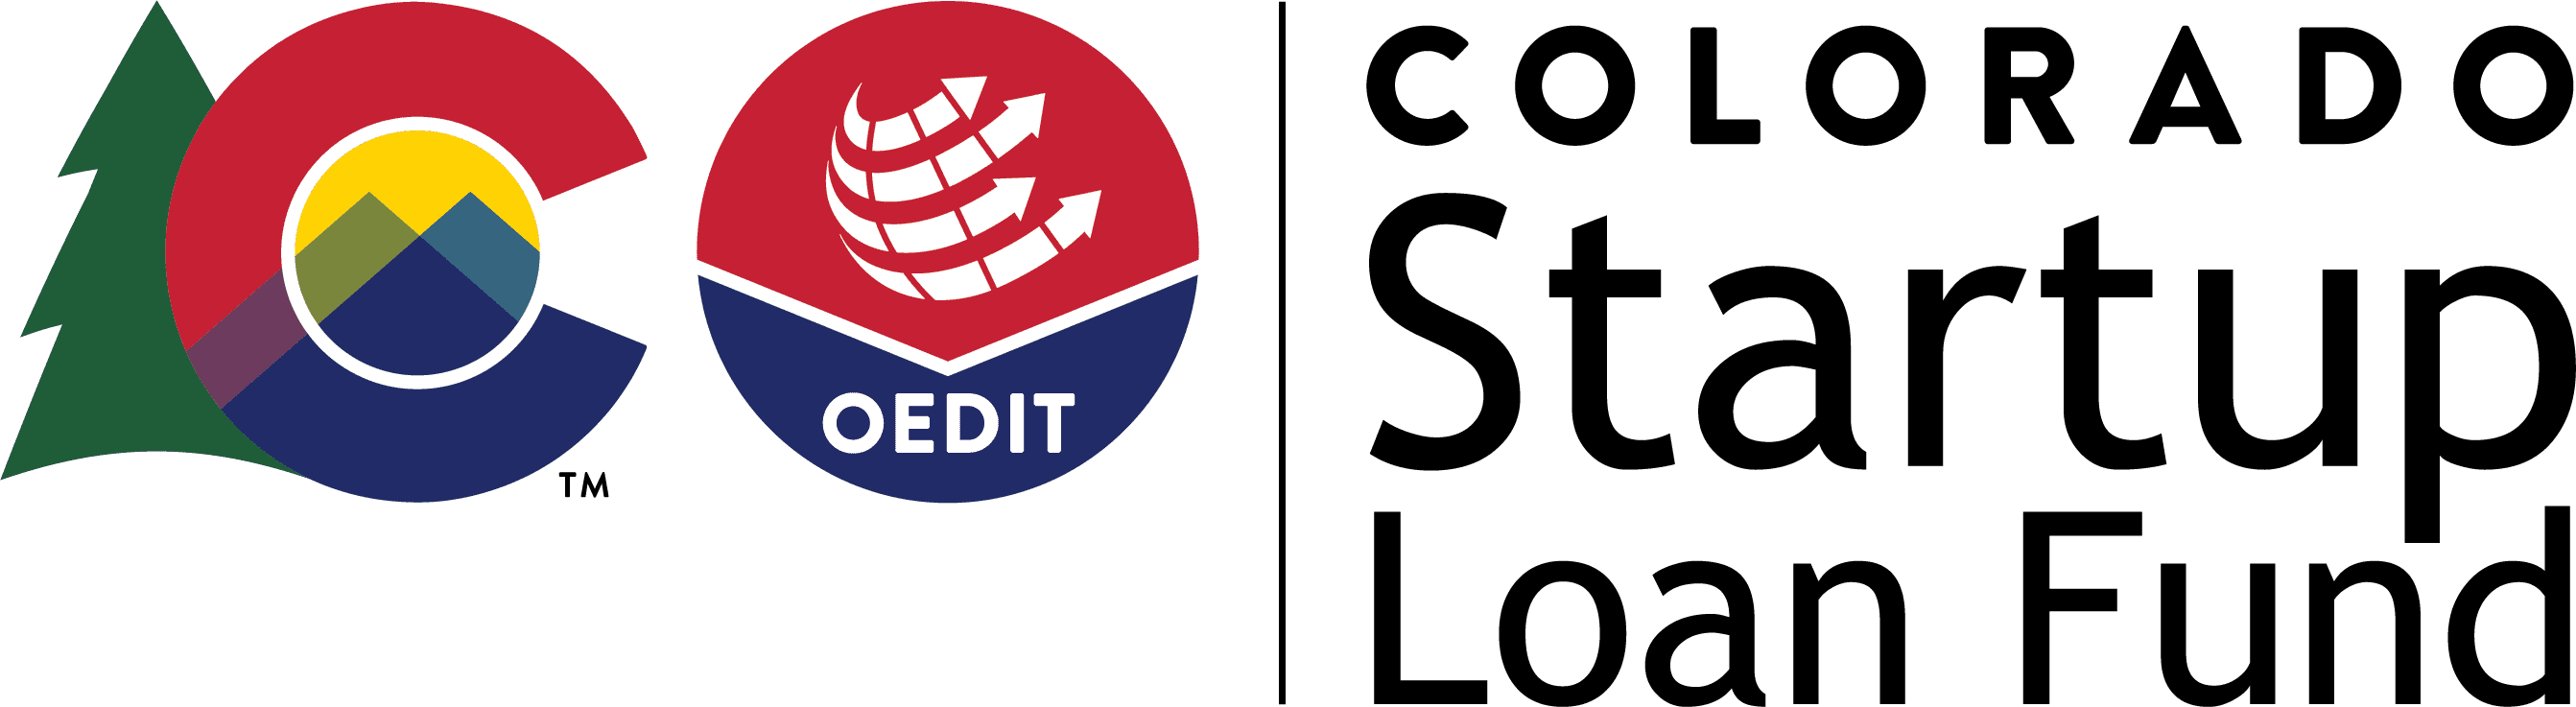 State of Colorado OEDIT - Colorado Startup Loan Fund Logo